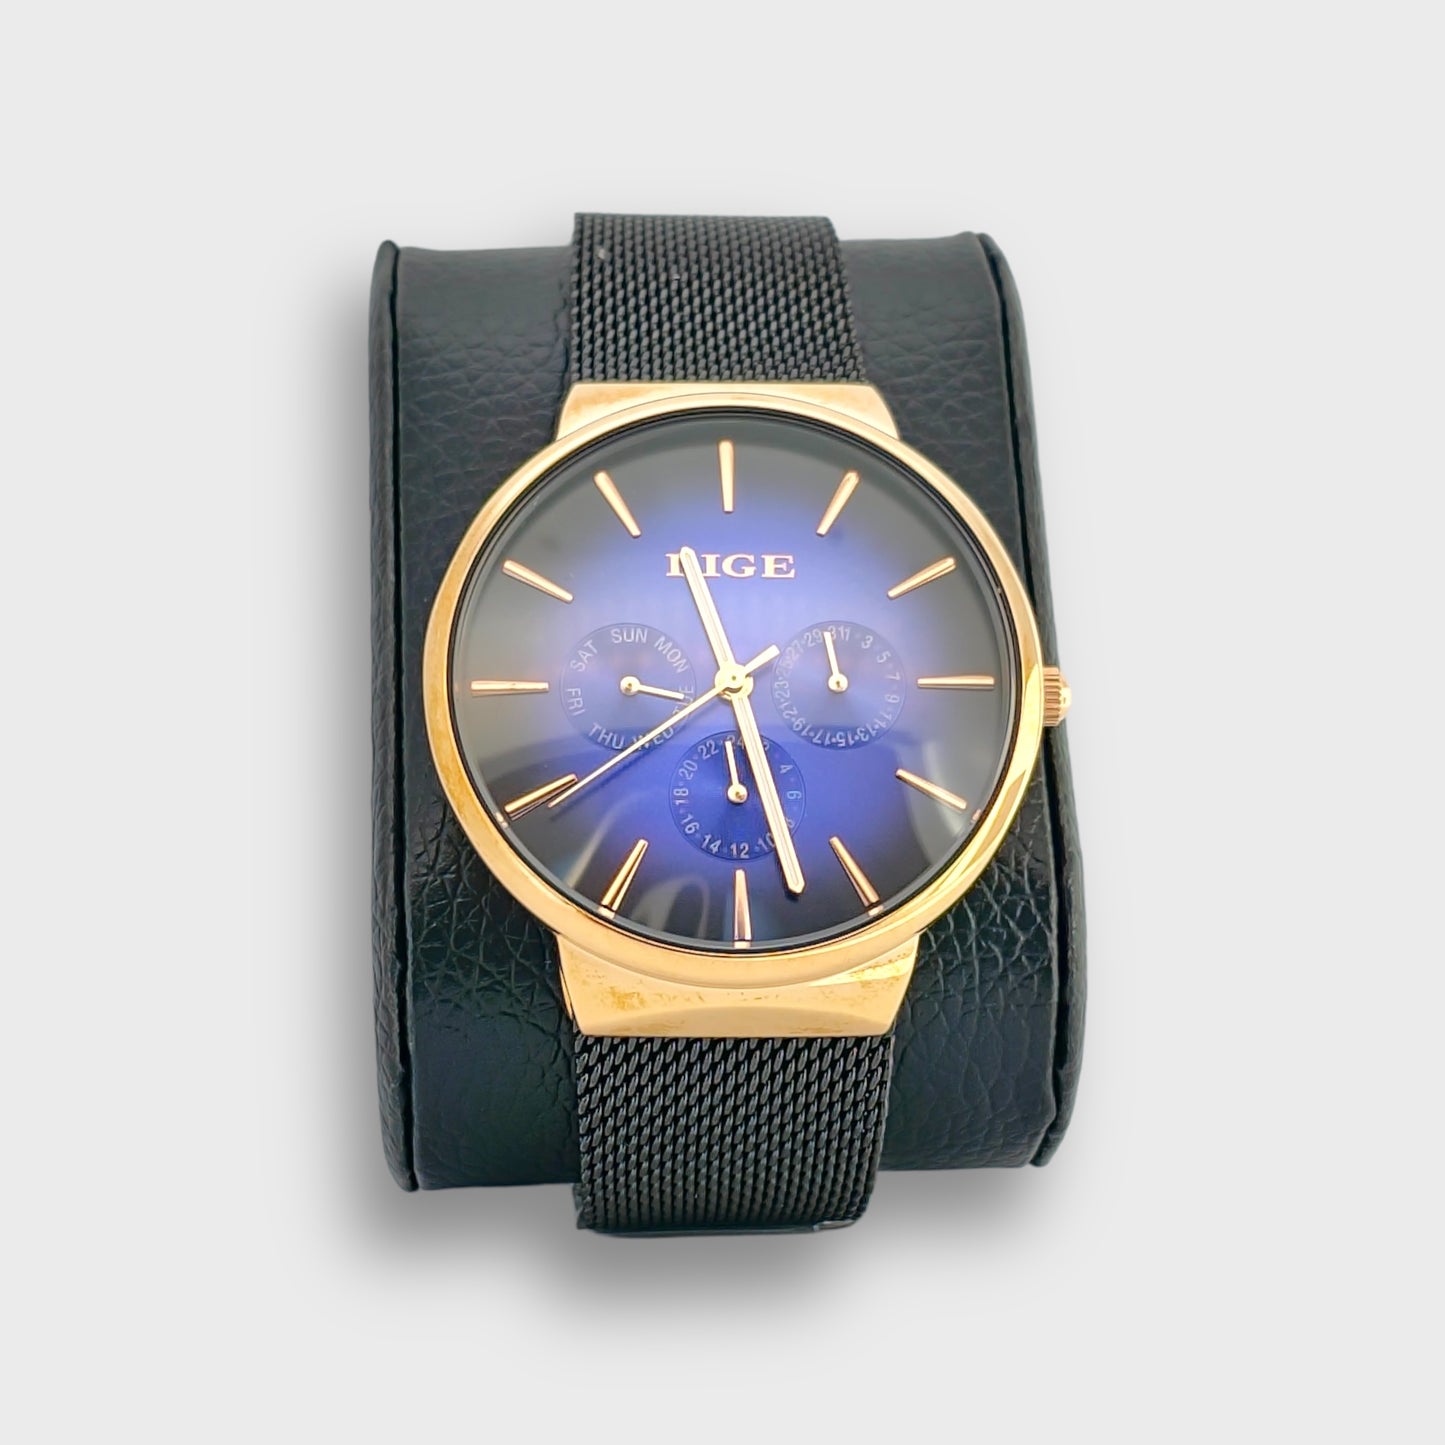 Top Brand LIGE Luxury Ultra-Thin Unisex Quartz Watch in Red Green or Blue